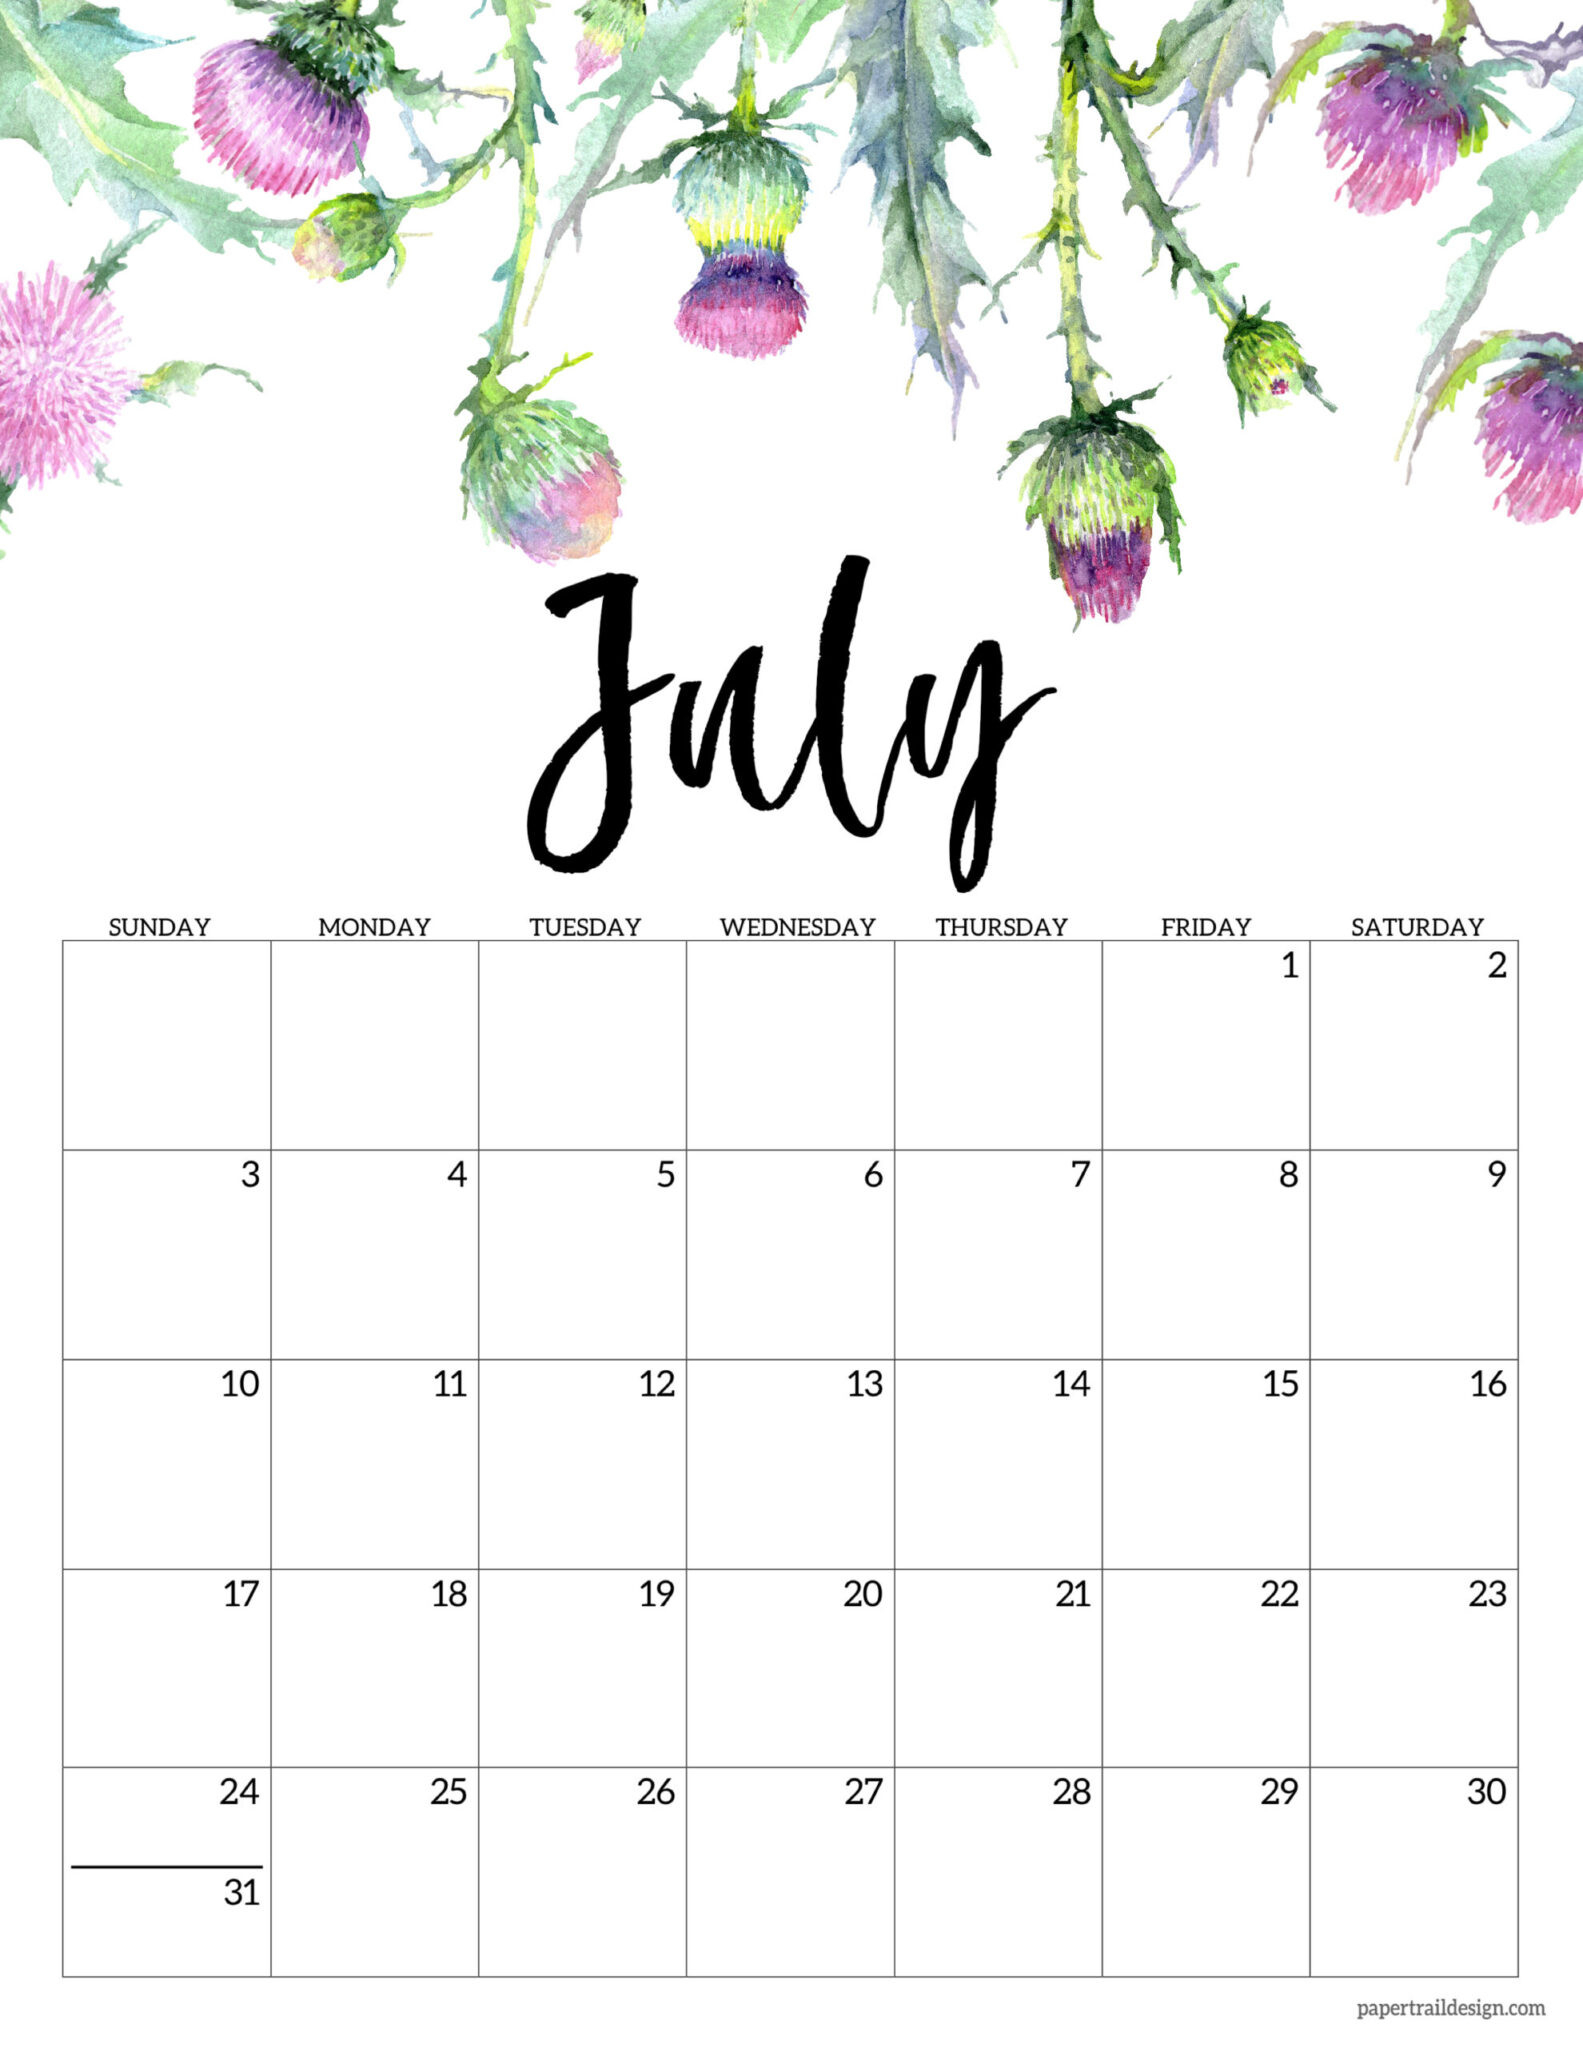 2022 Free Printable Calendar - Floral | Paper Trail Design  Free Printable Calendar 2022 Without Download